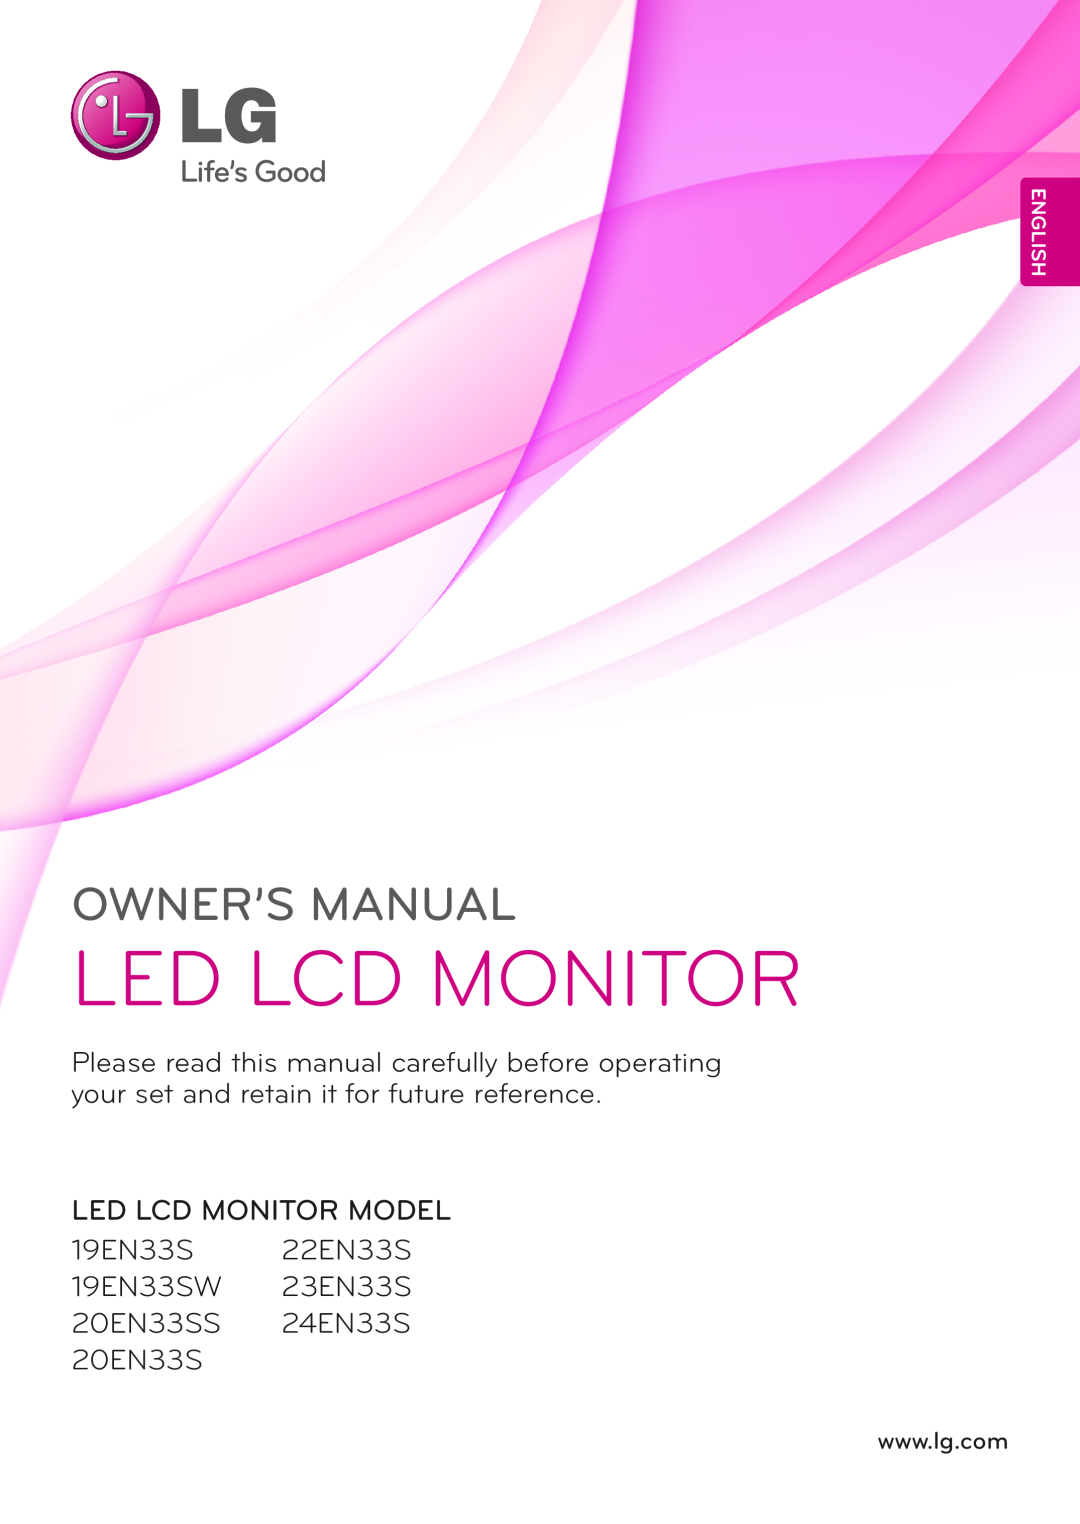 LG Electronics 23EN33S, 24EN33S, 22EN33S, 20EN33SS, 19EN33S owner manual Owner’S Manual, Led Lcd Monitor Model, English 